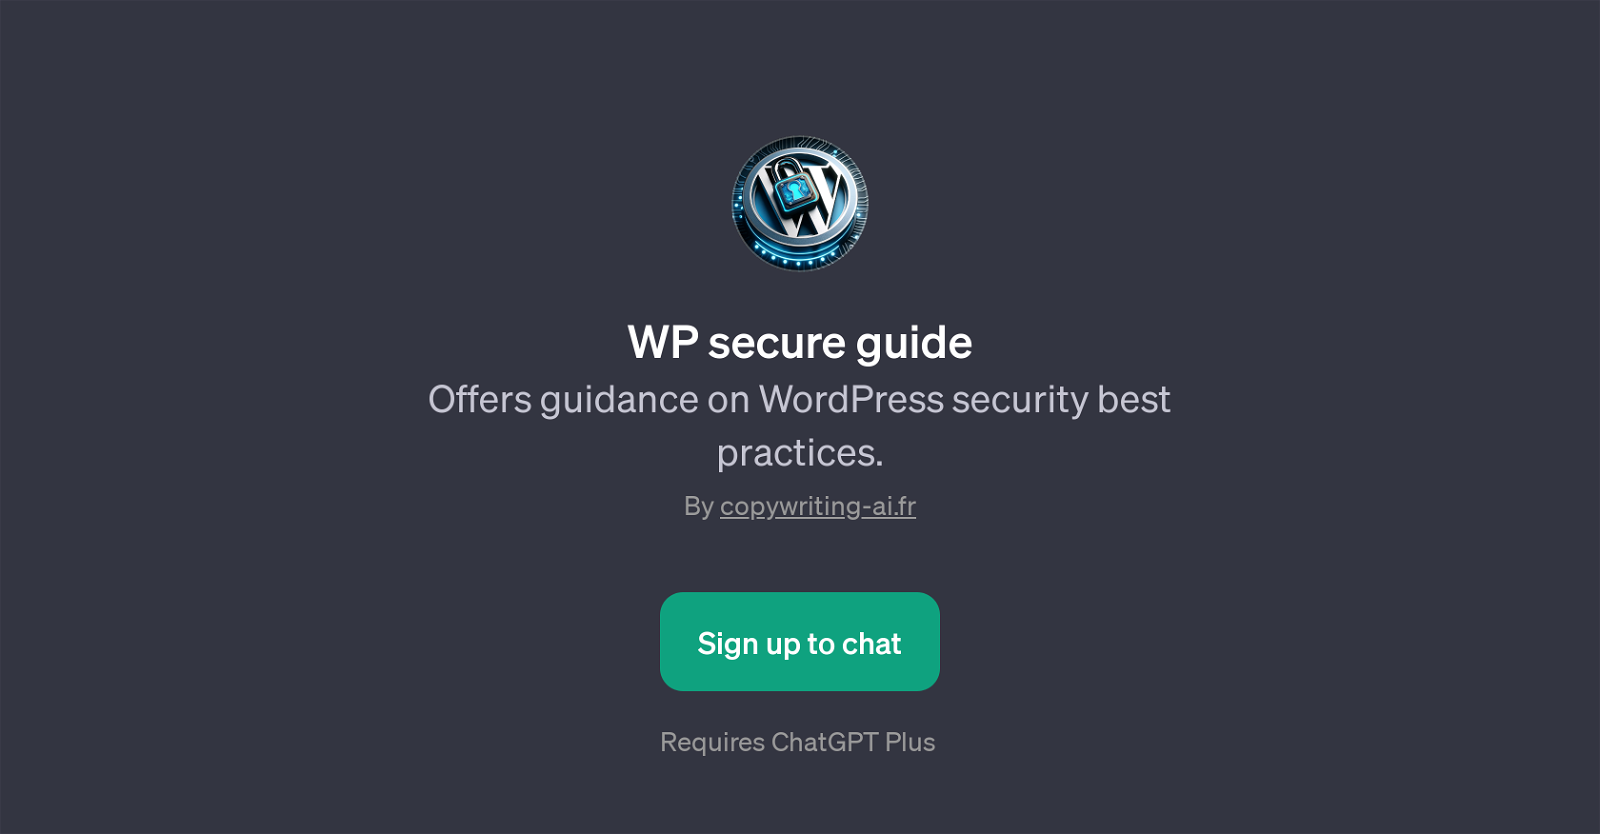 WP secure guide website